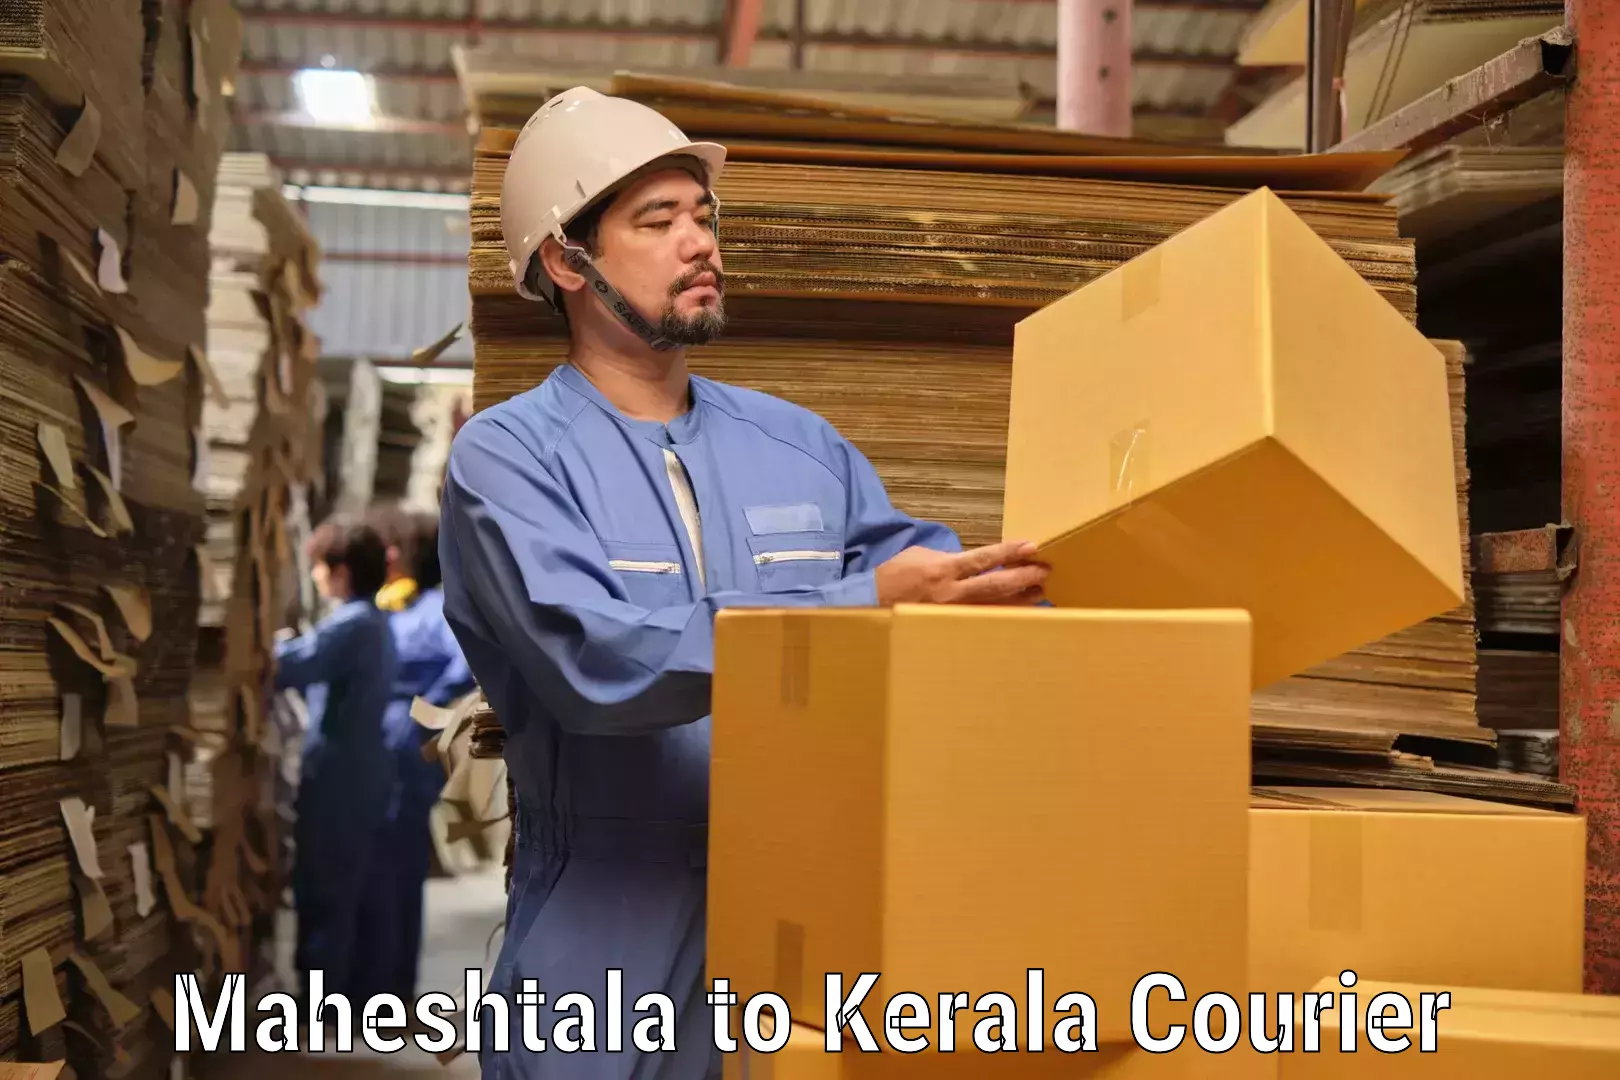 Digital courier platforms Maheshtala to Kerala